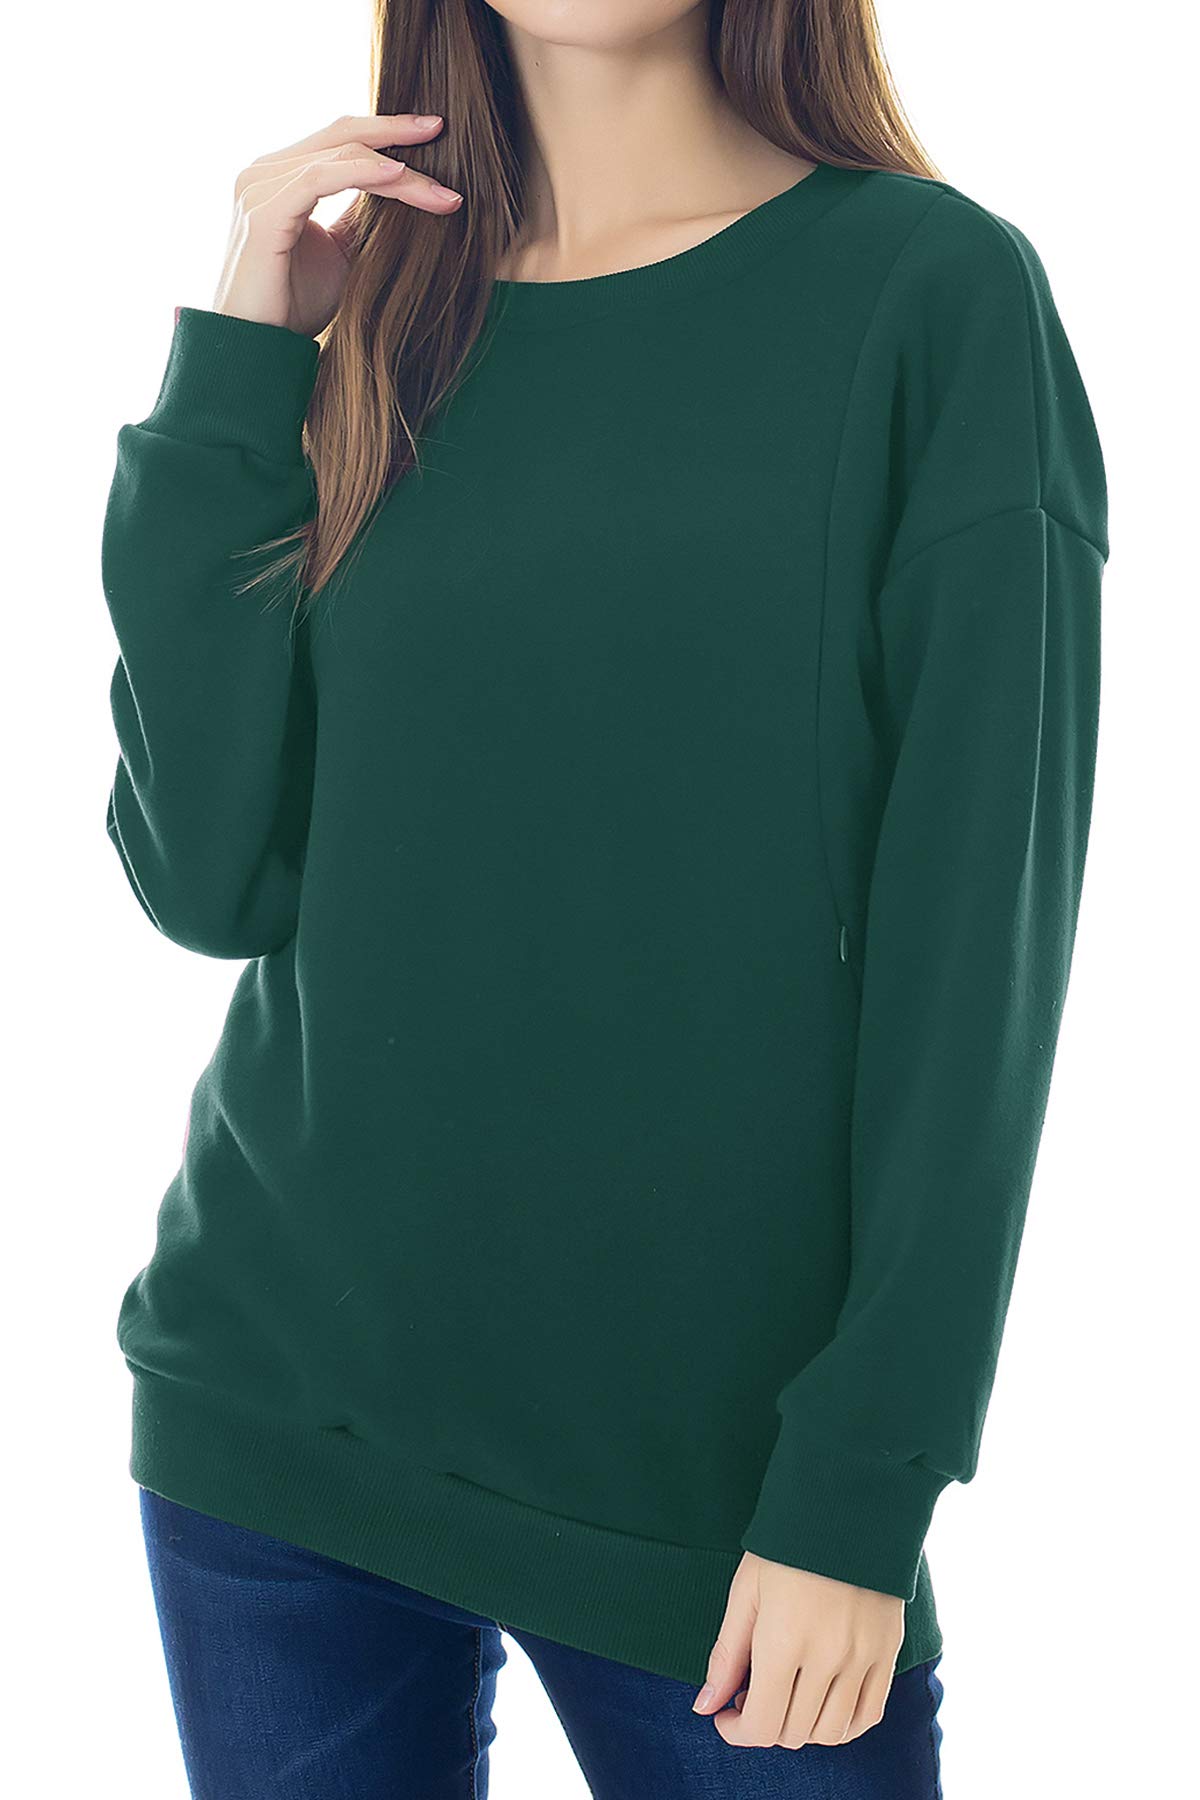 Smallshow Pflege Sweatshirt Langarm T-Shirt Bluse Stillen Pullover Tops Stillshirt Emerald Green S